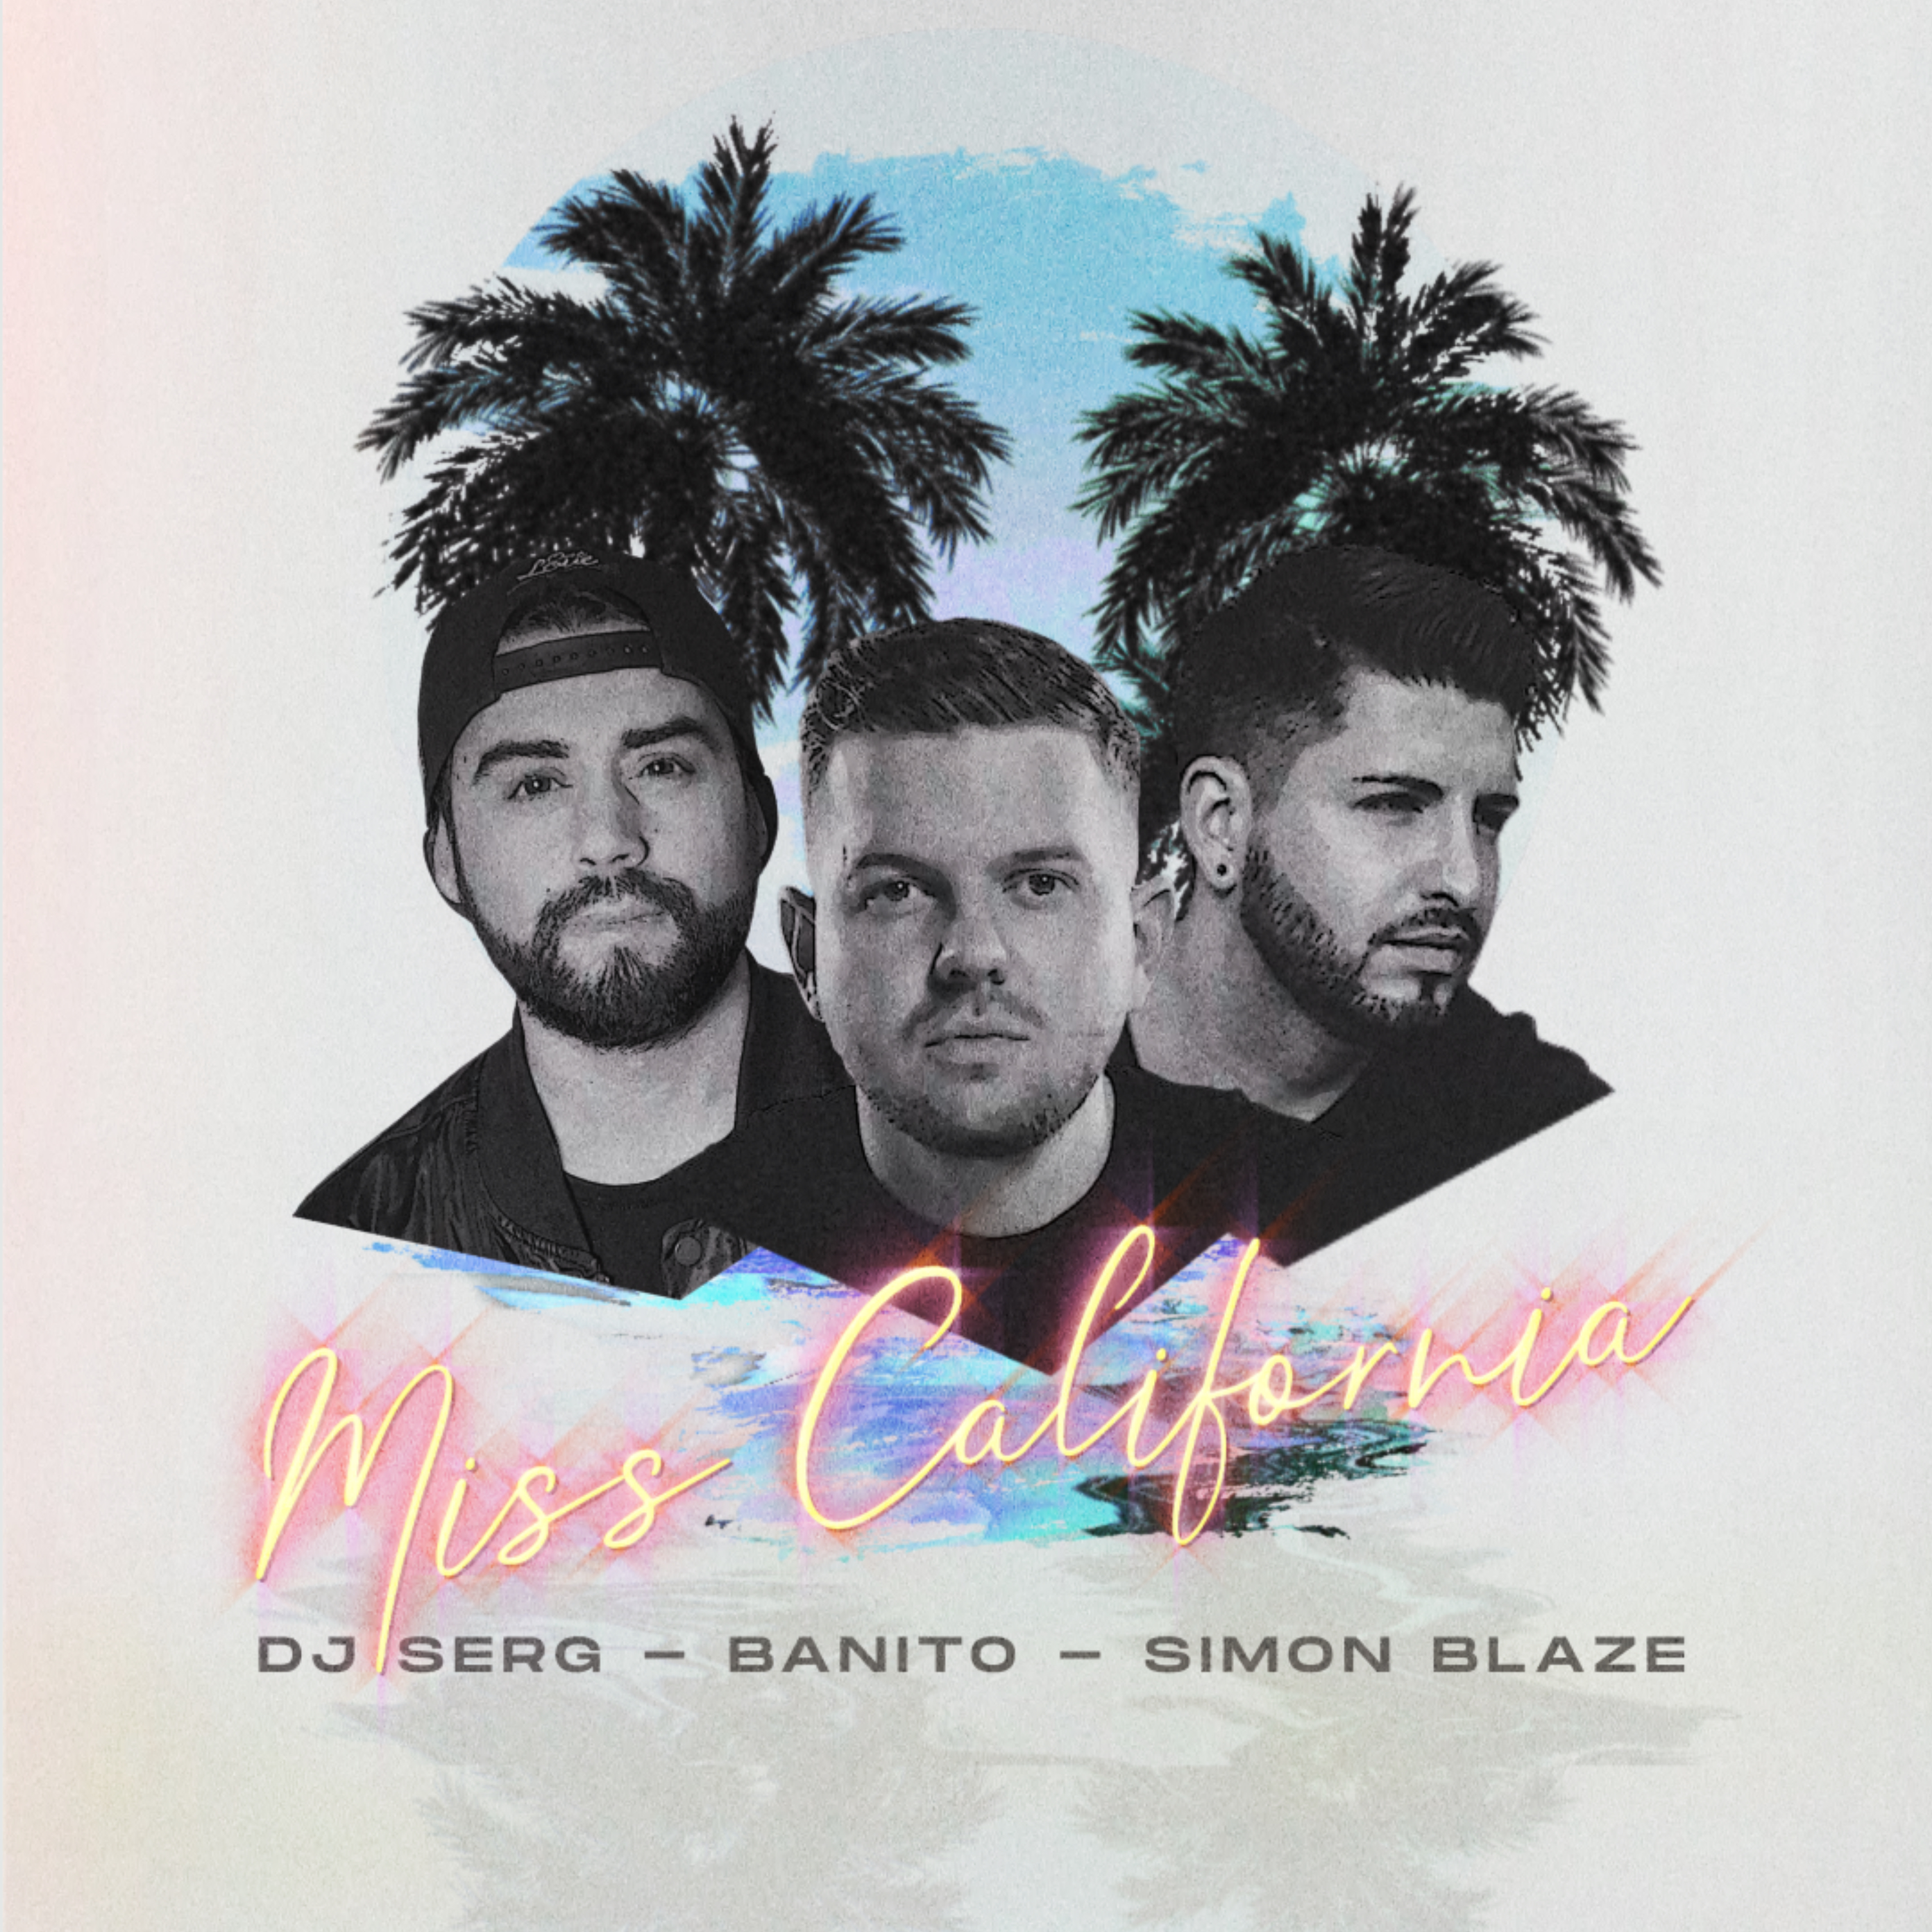 Music producer Simon Blaze Collaborates with DJ Serg & Banito to Recreate 2001 Hit "Miss California."